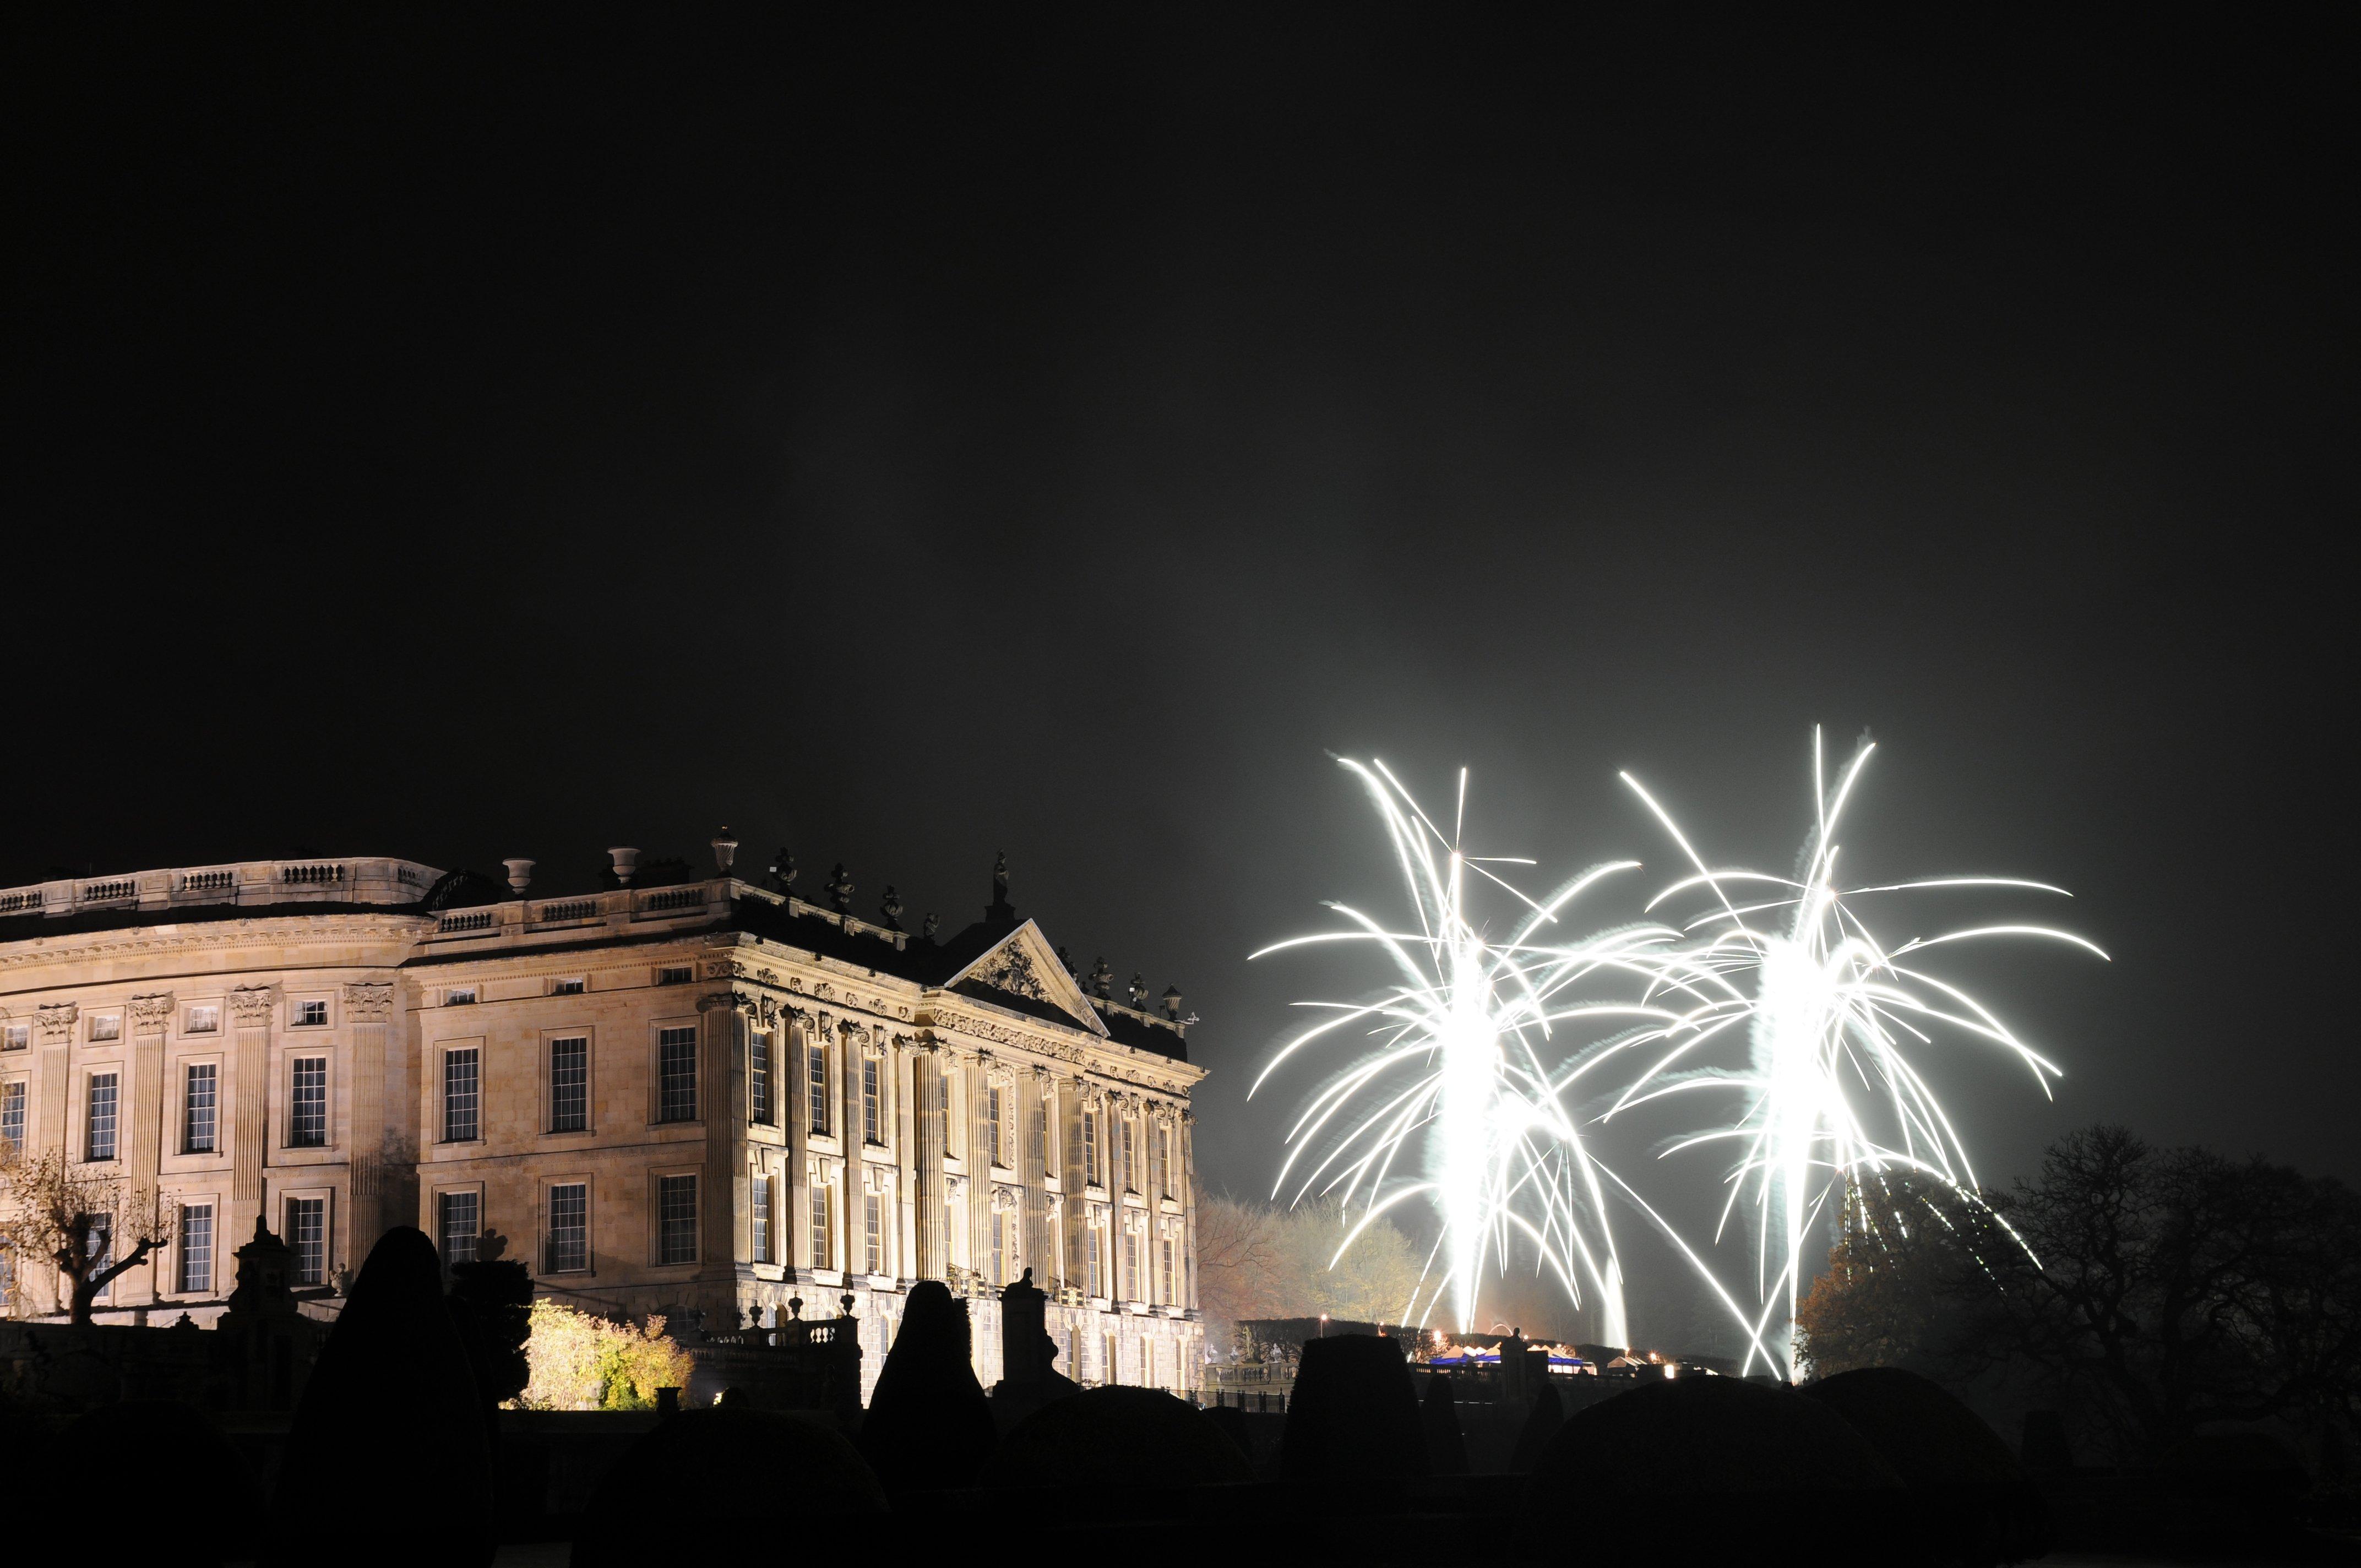 Chatsworth House lights up Peak sky with fireworks displays celebrating